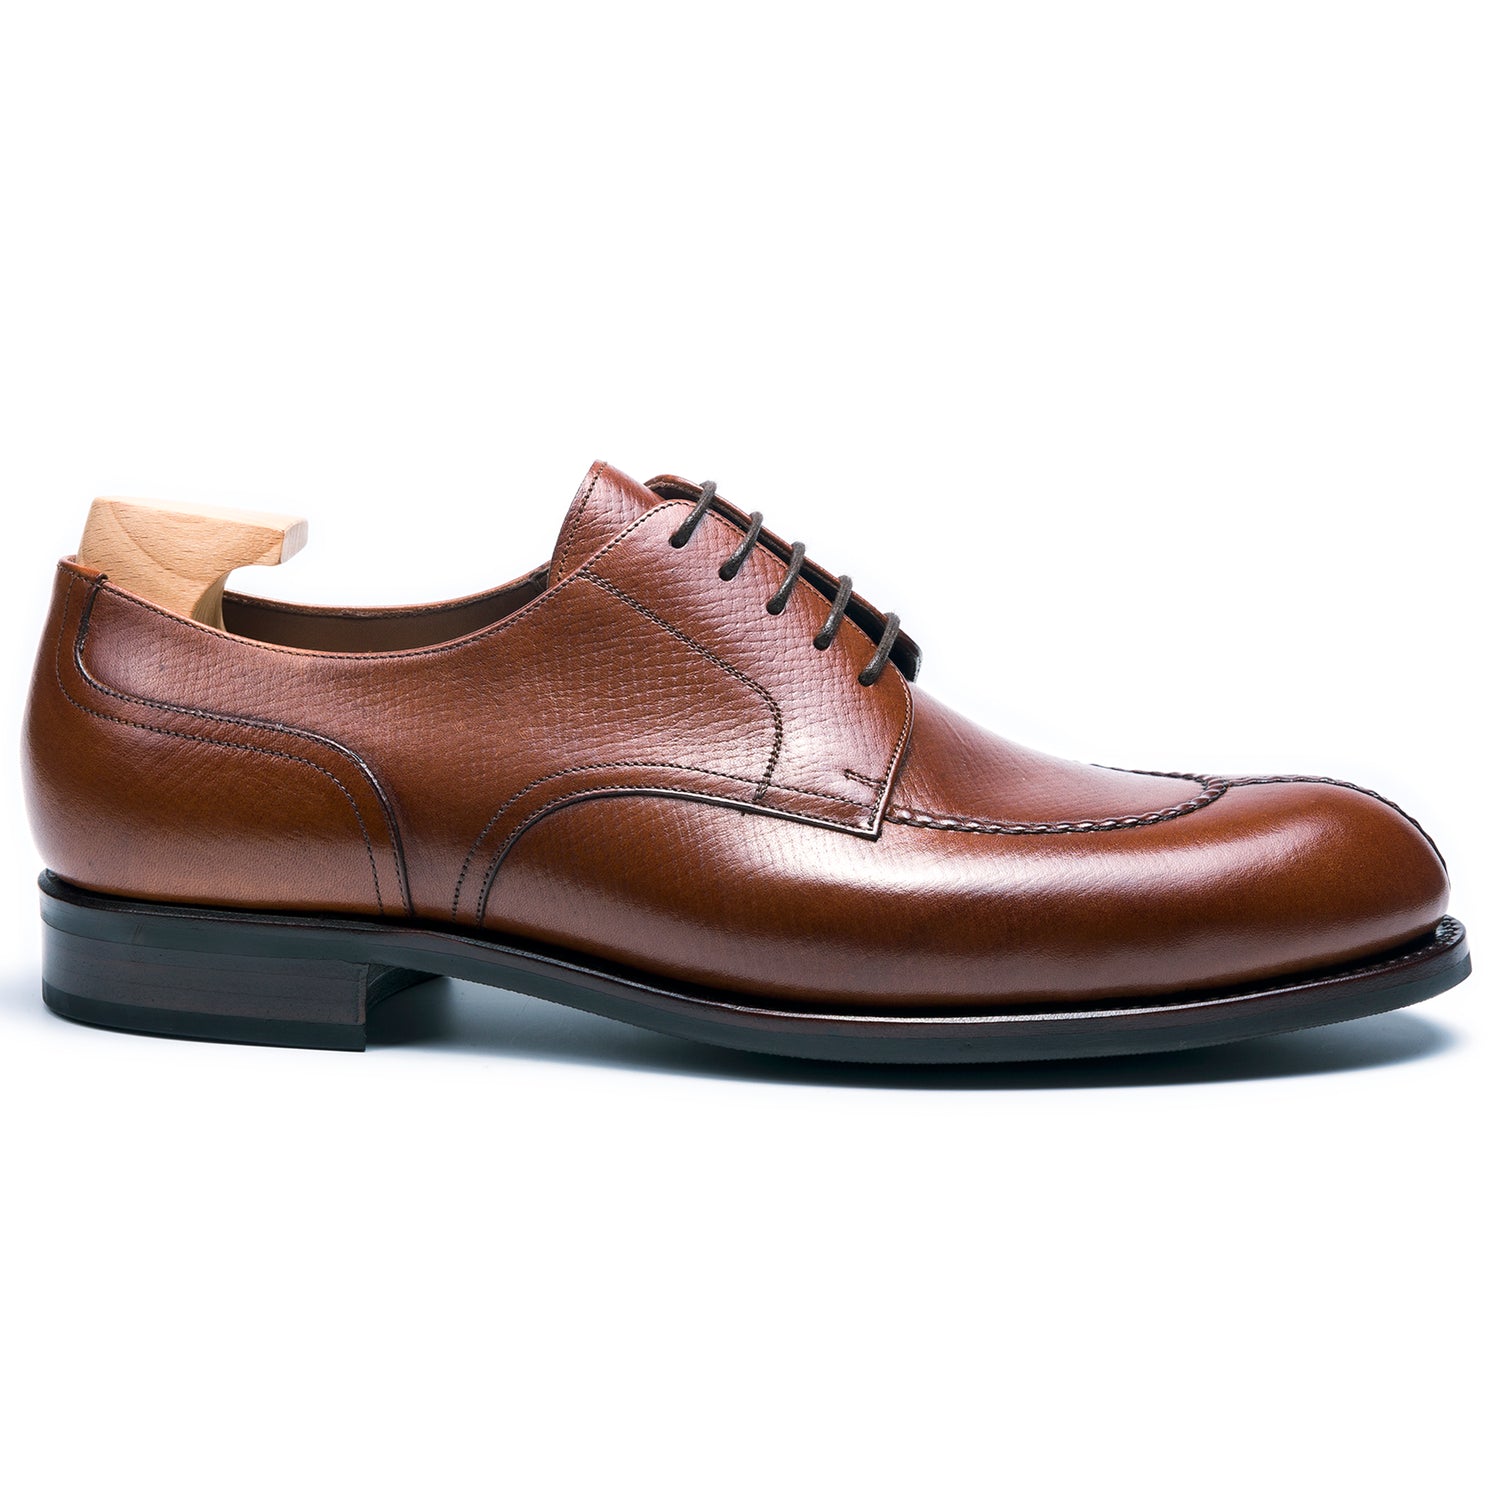 TLB Mallorca leather shoes 534 / HOWARD / HATCH GRAIN TAN